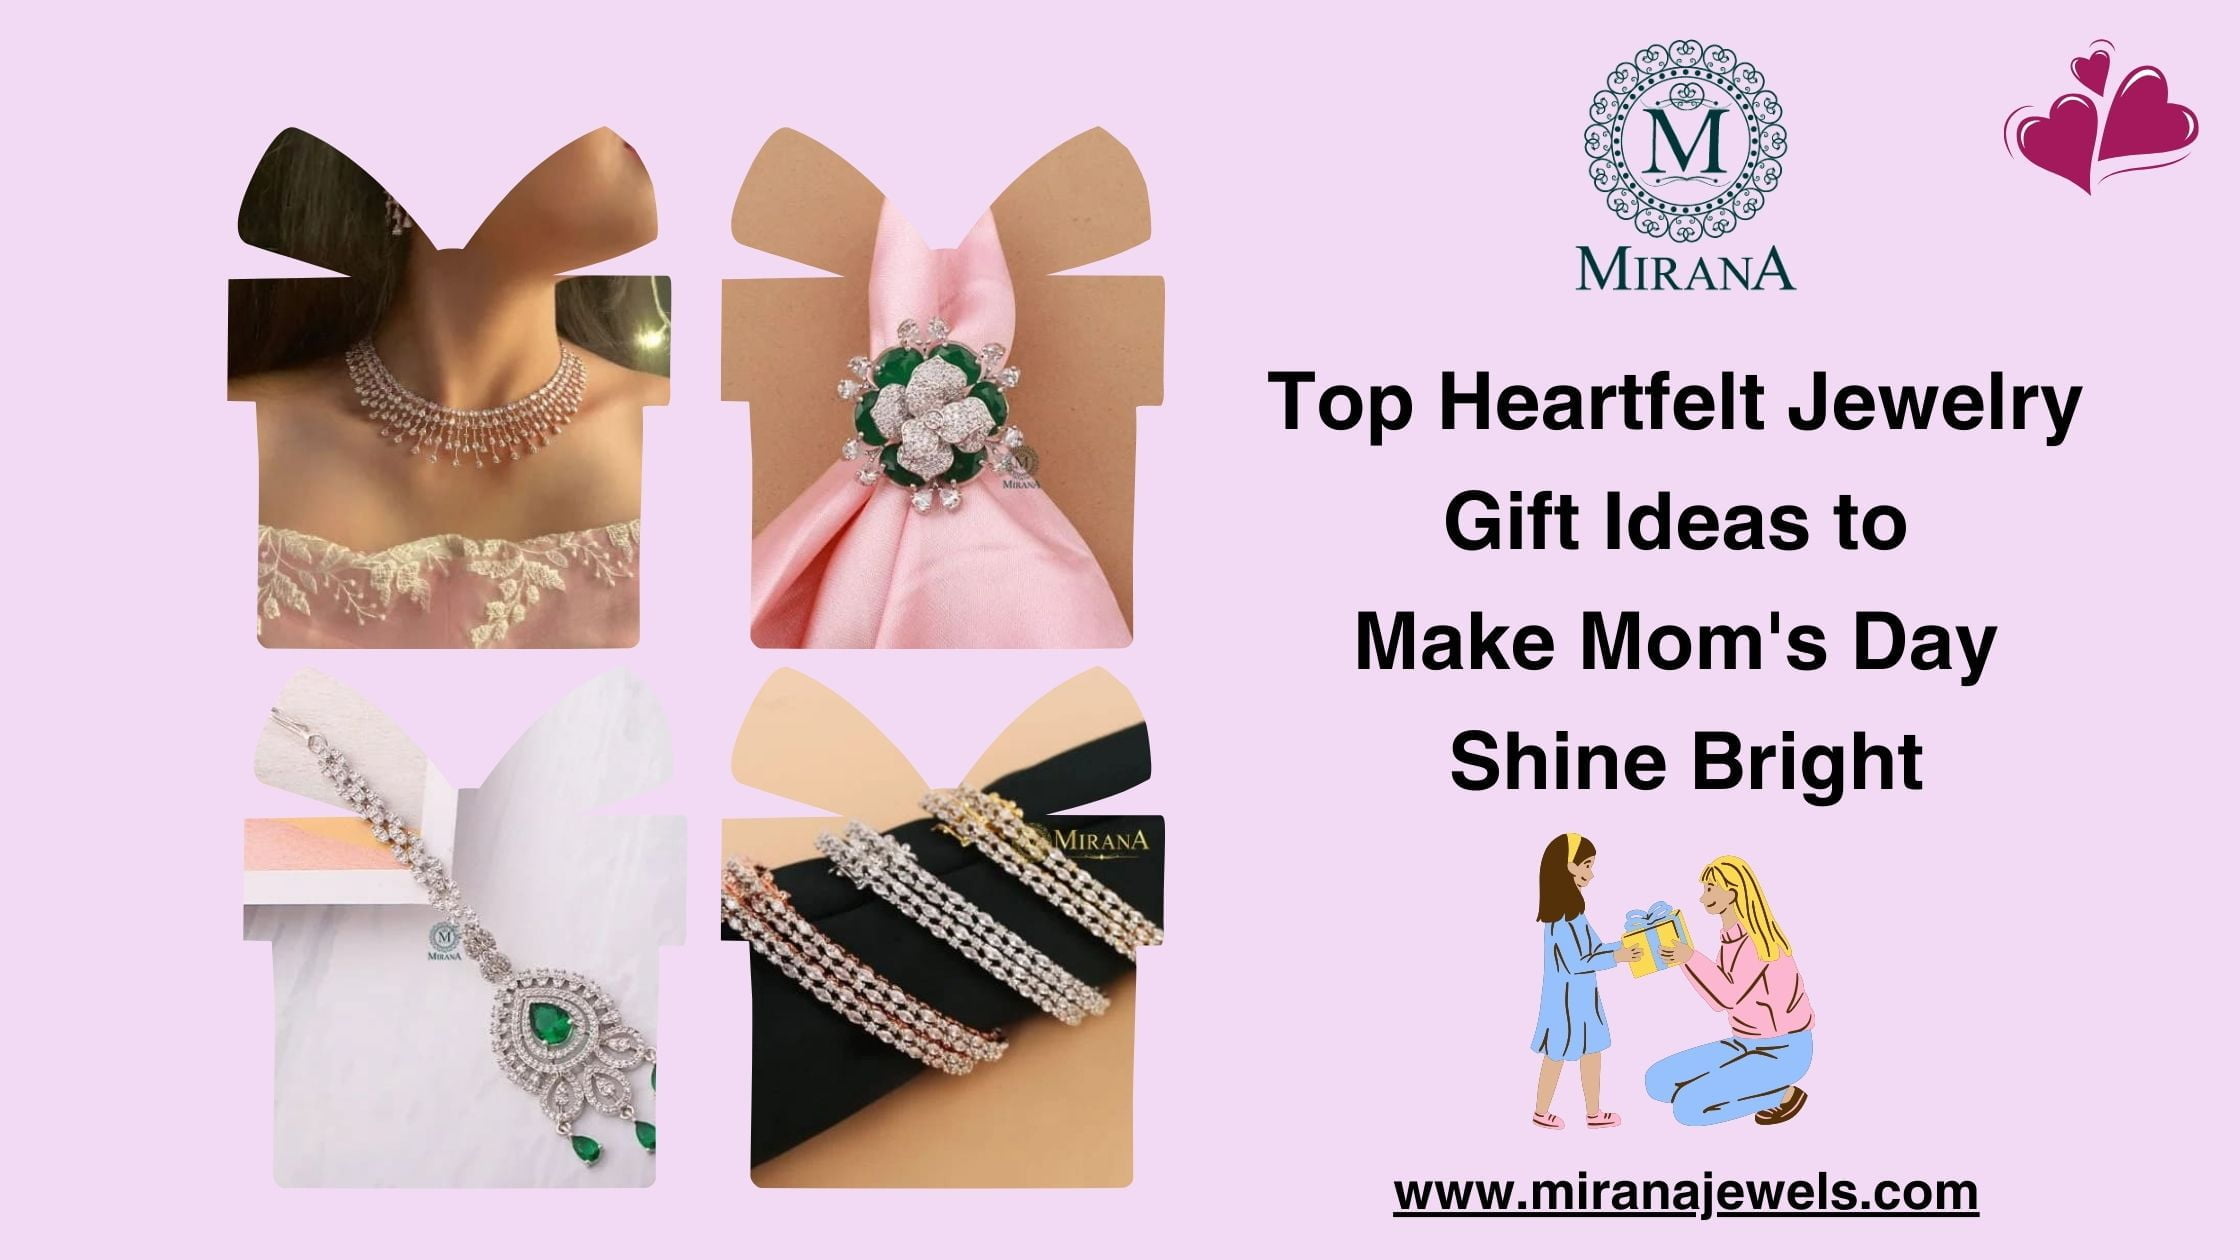 Top Heartfelt Jewelry Gift Ideas to Make Mom's Day Shine Bright